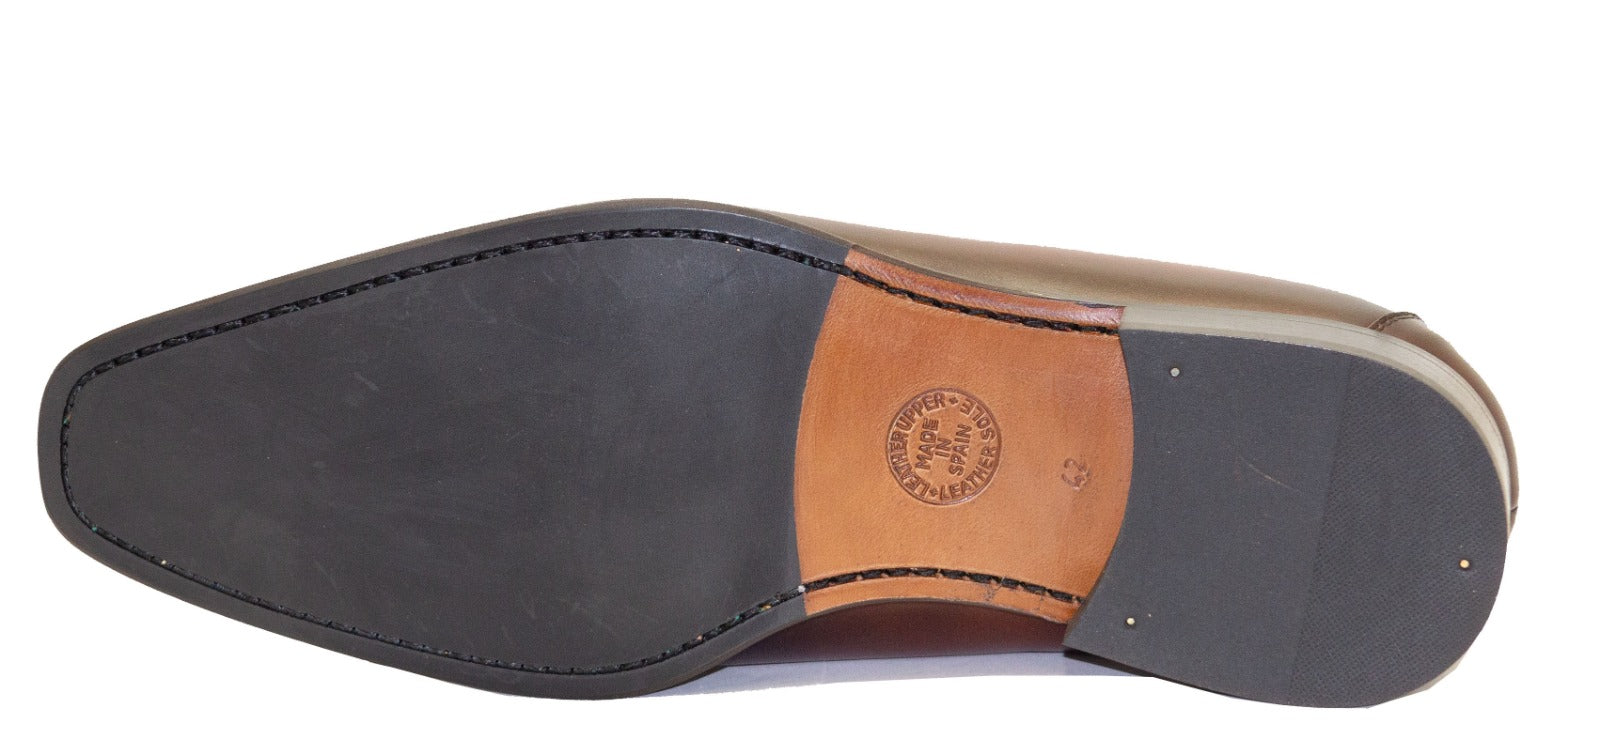 Luciana Men's Cognac (Tan) Leather Plain Toe Dress Shoe 7195